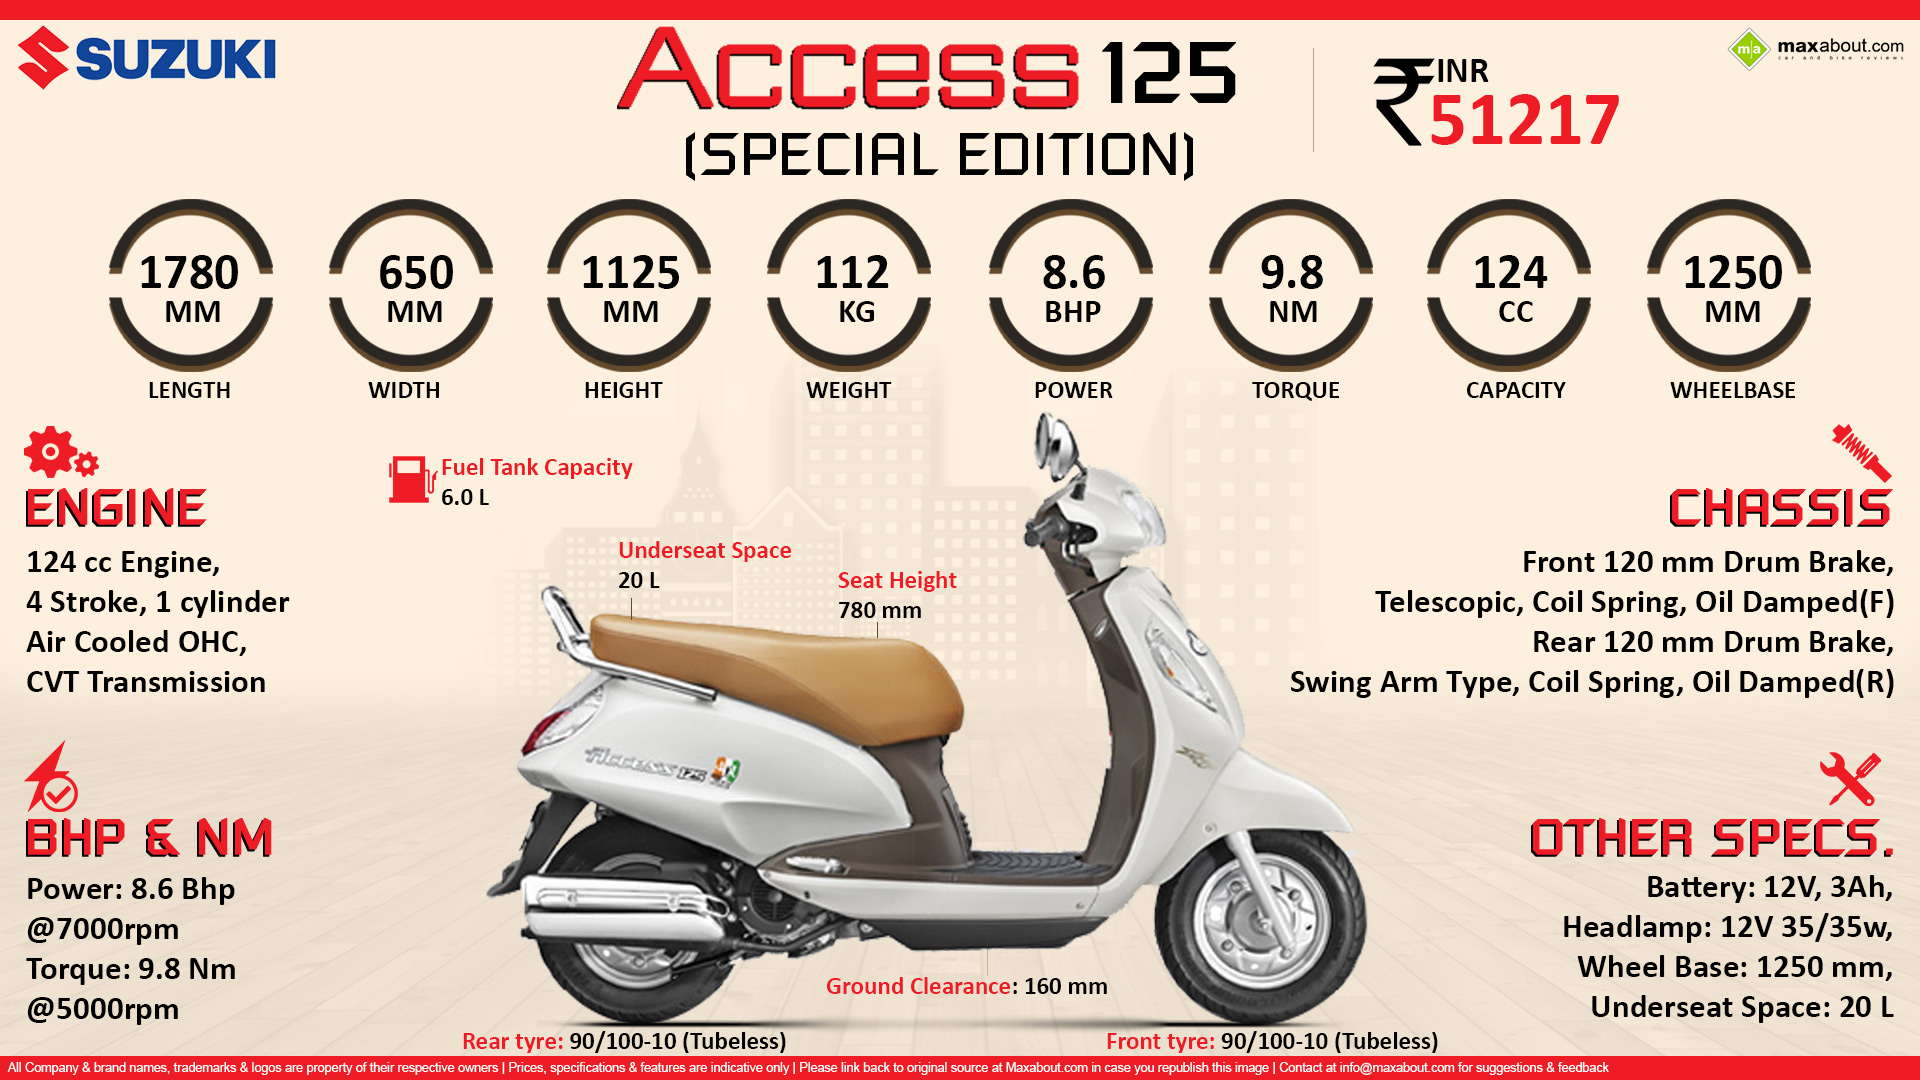 Quick Facts - Suzuki Access 125 Special Edition